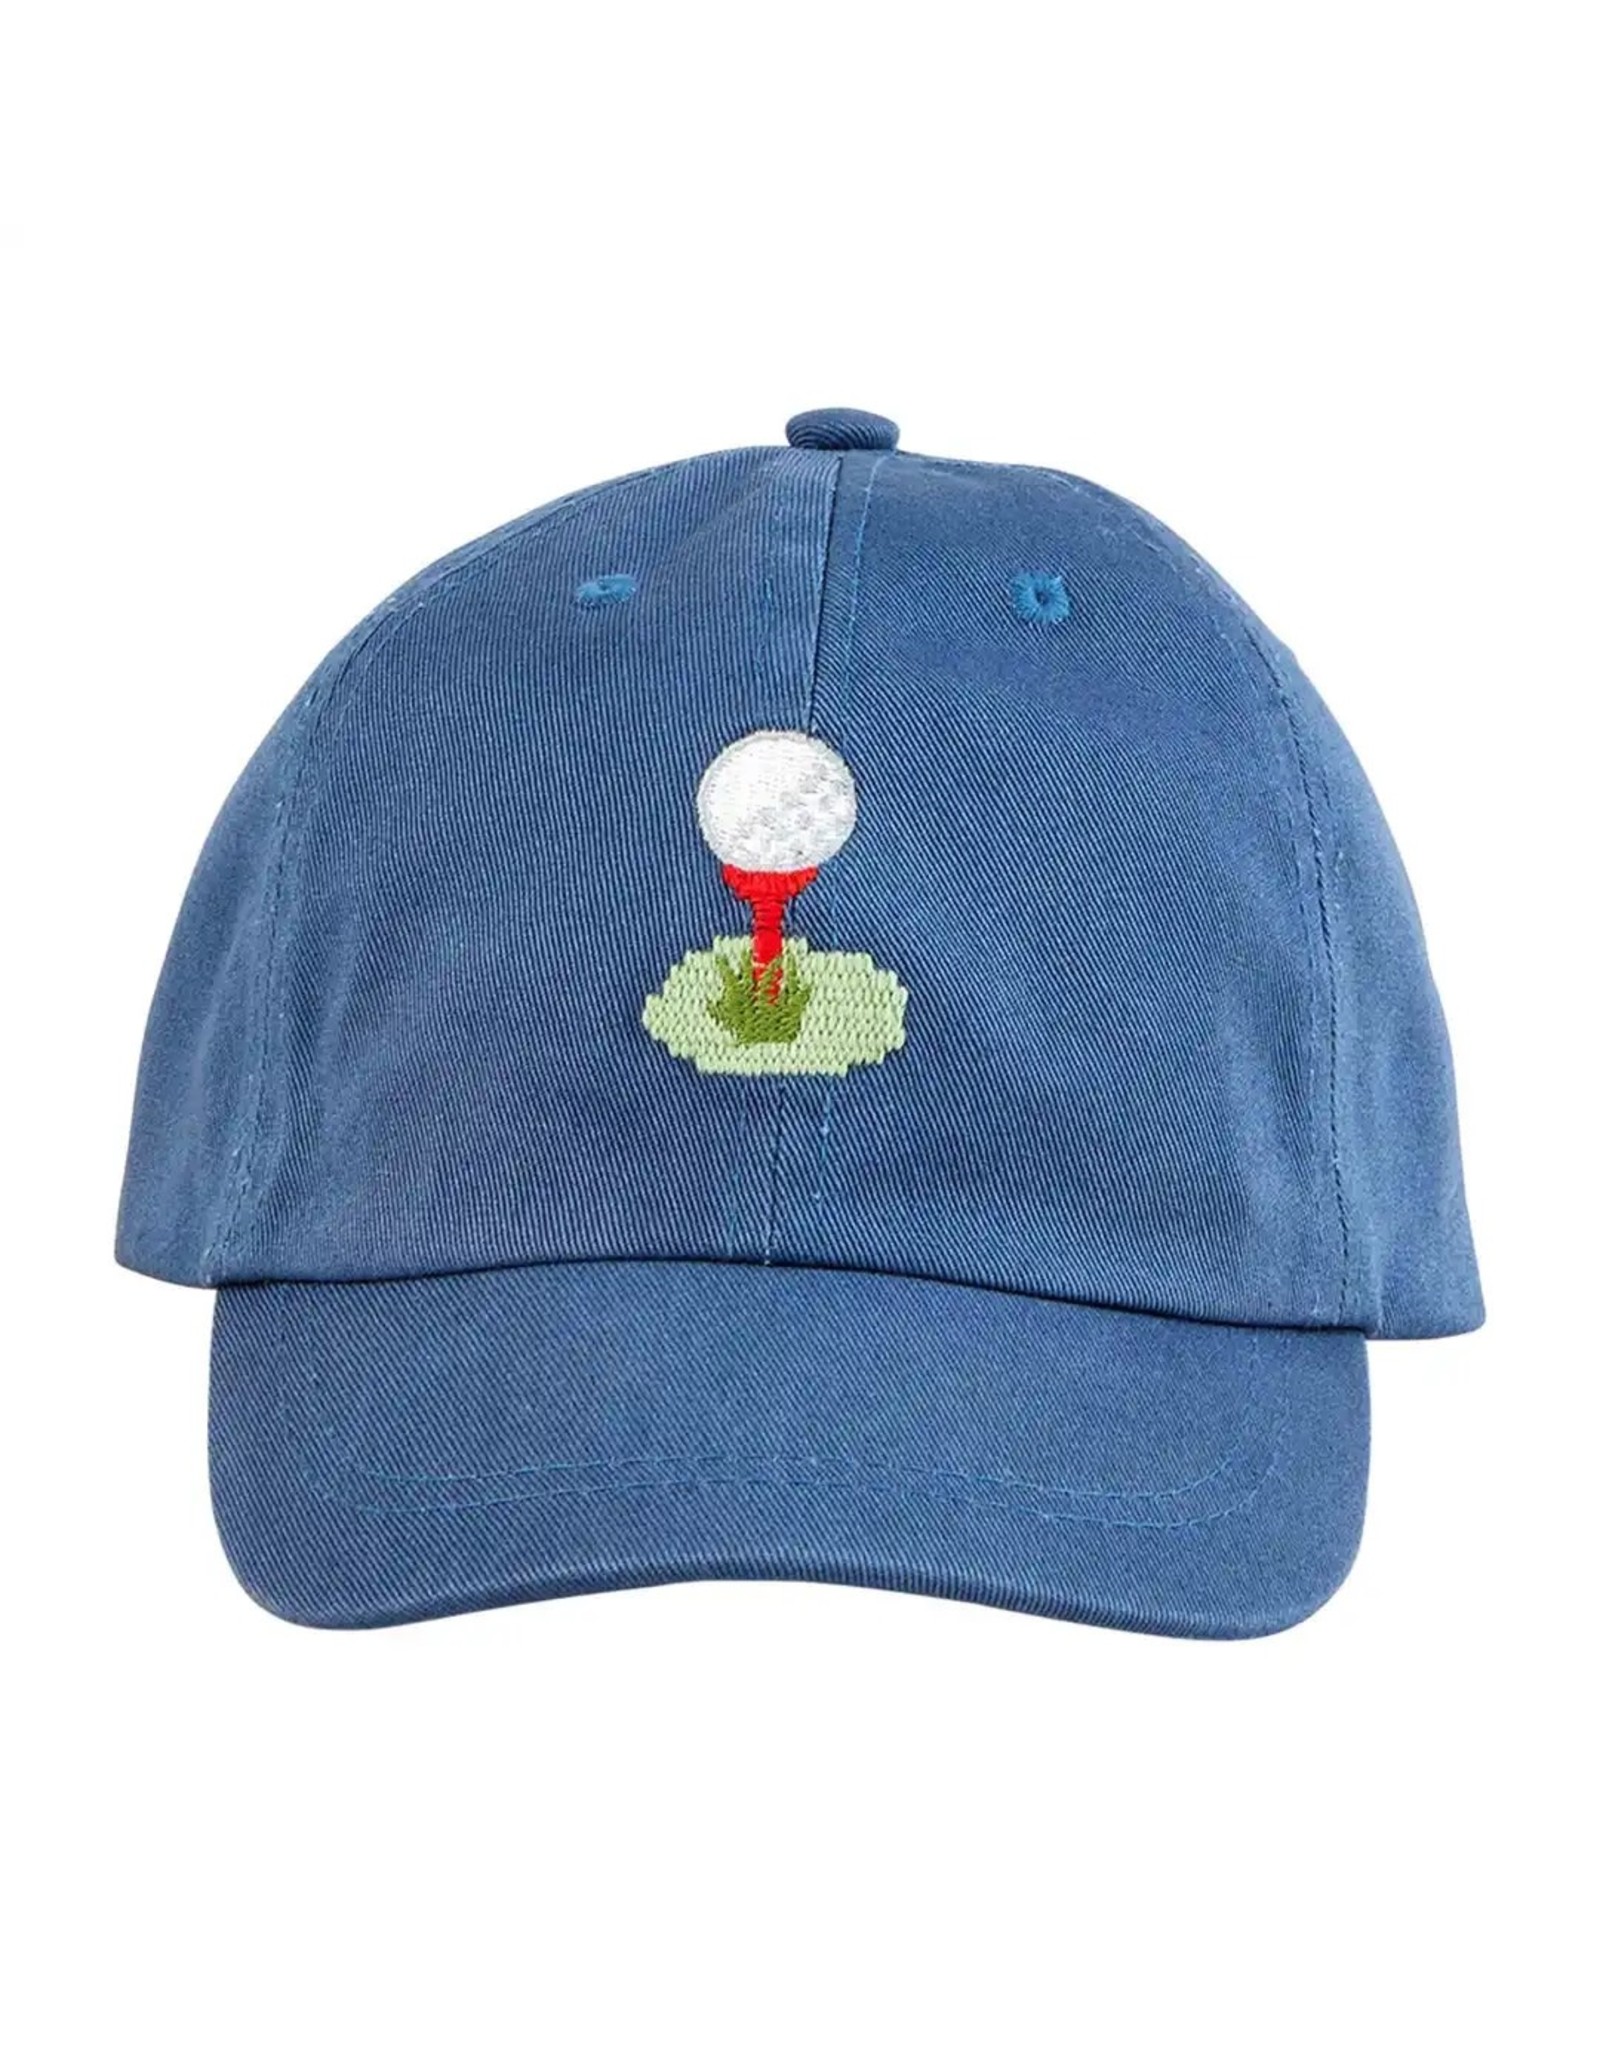 Golf Embroidered Kids Hat